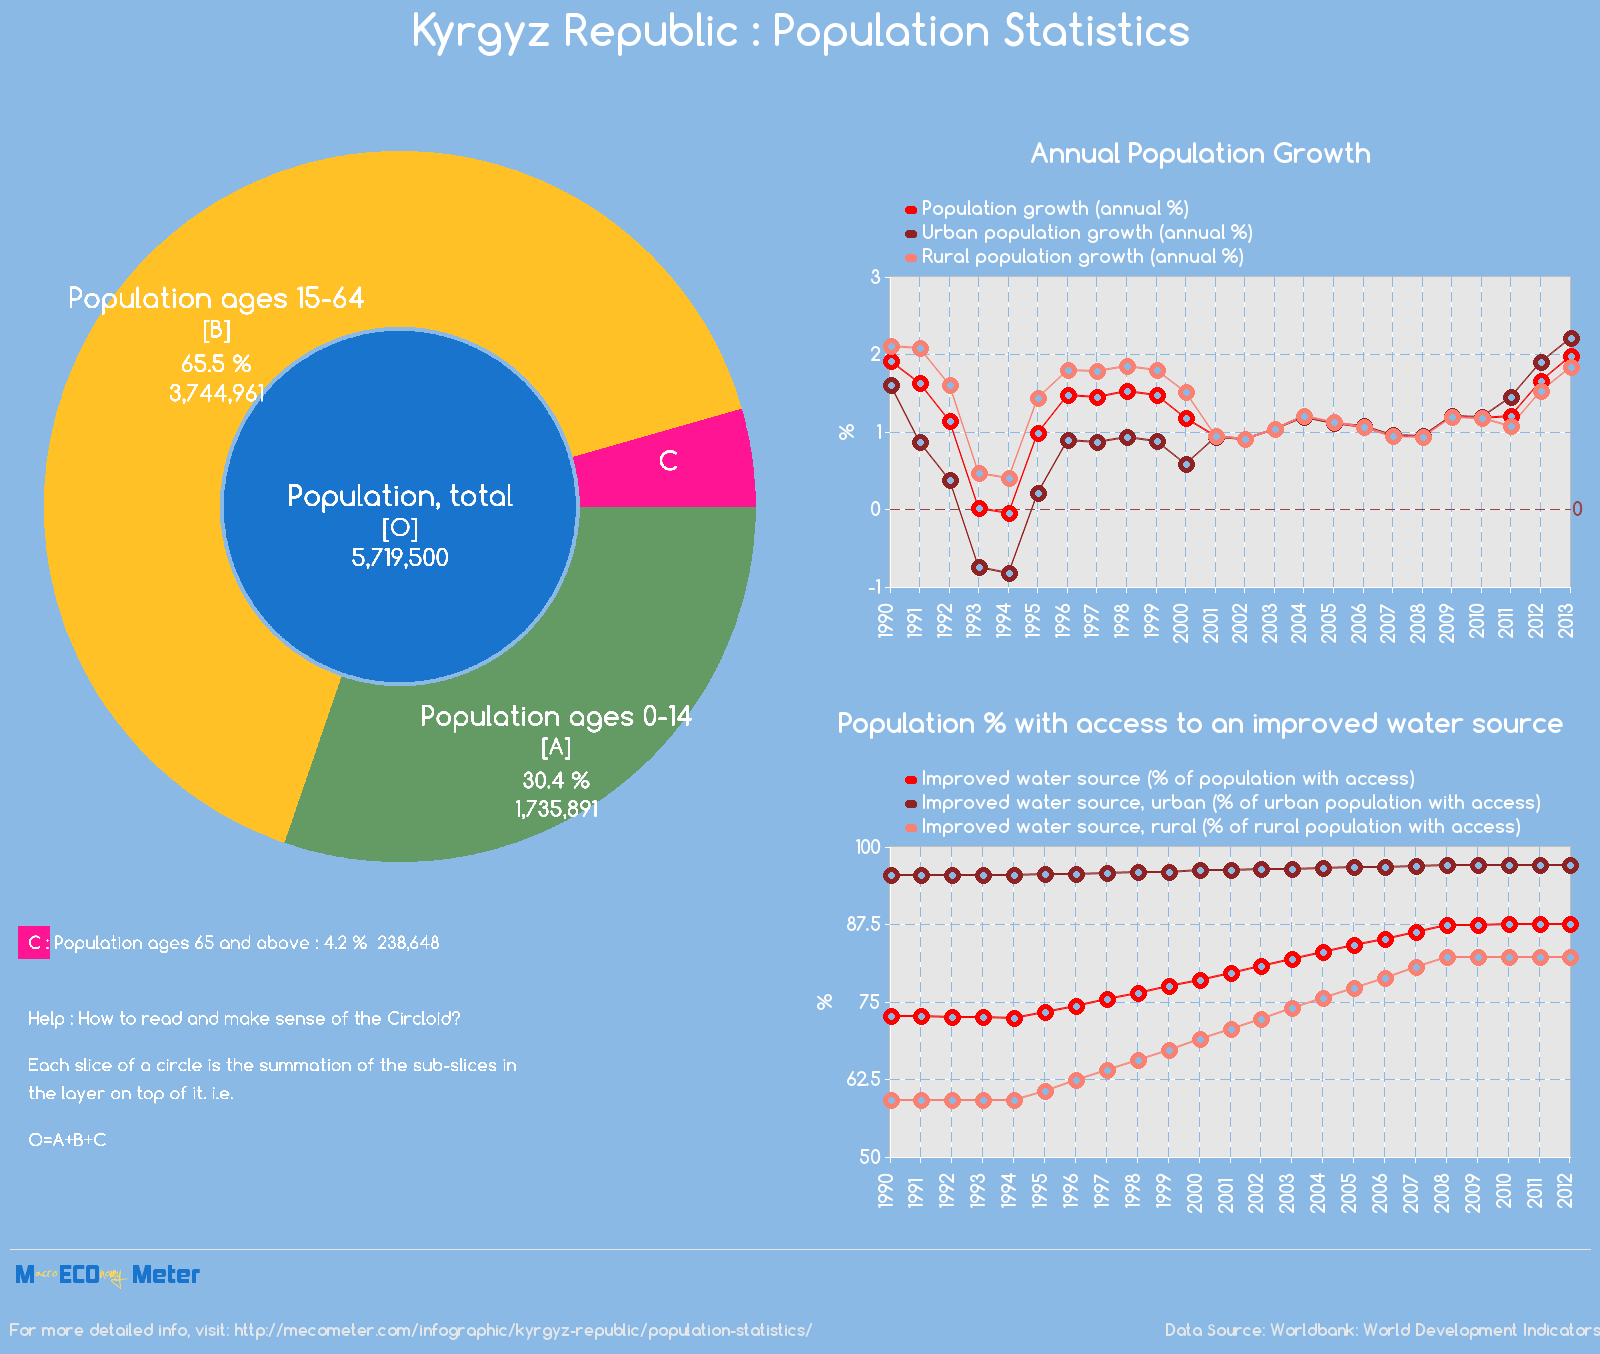 Kyrgyz Republic : Population Statistics